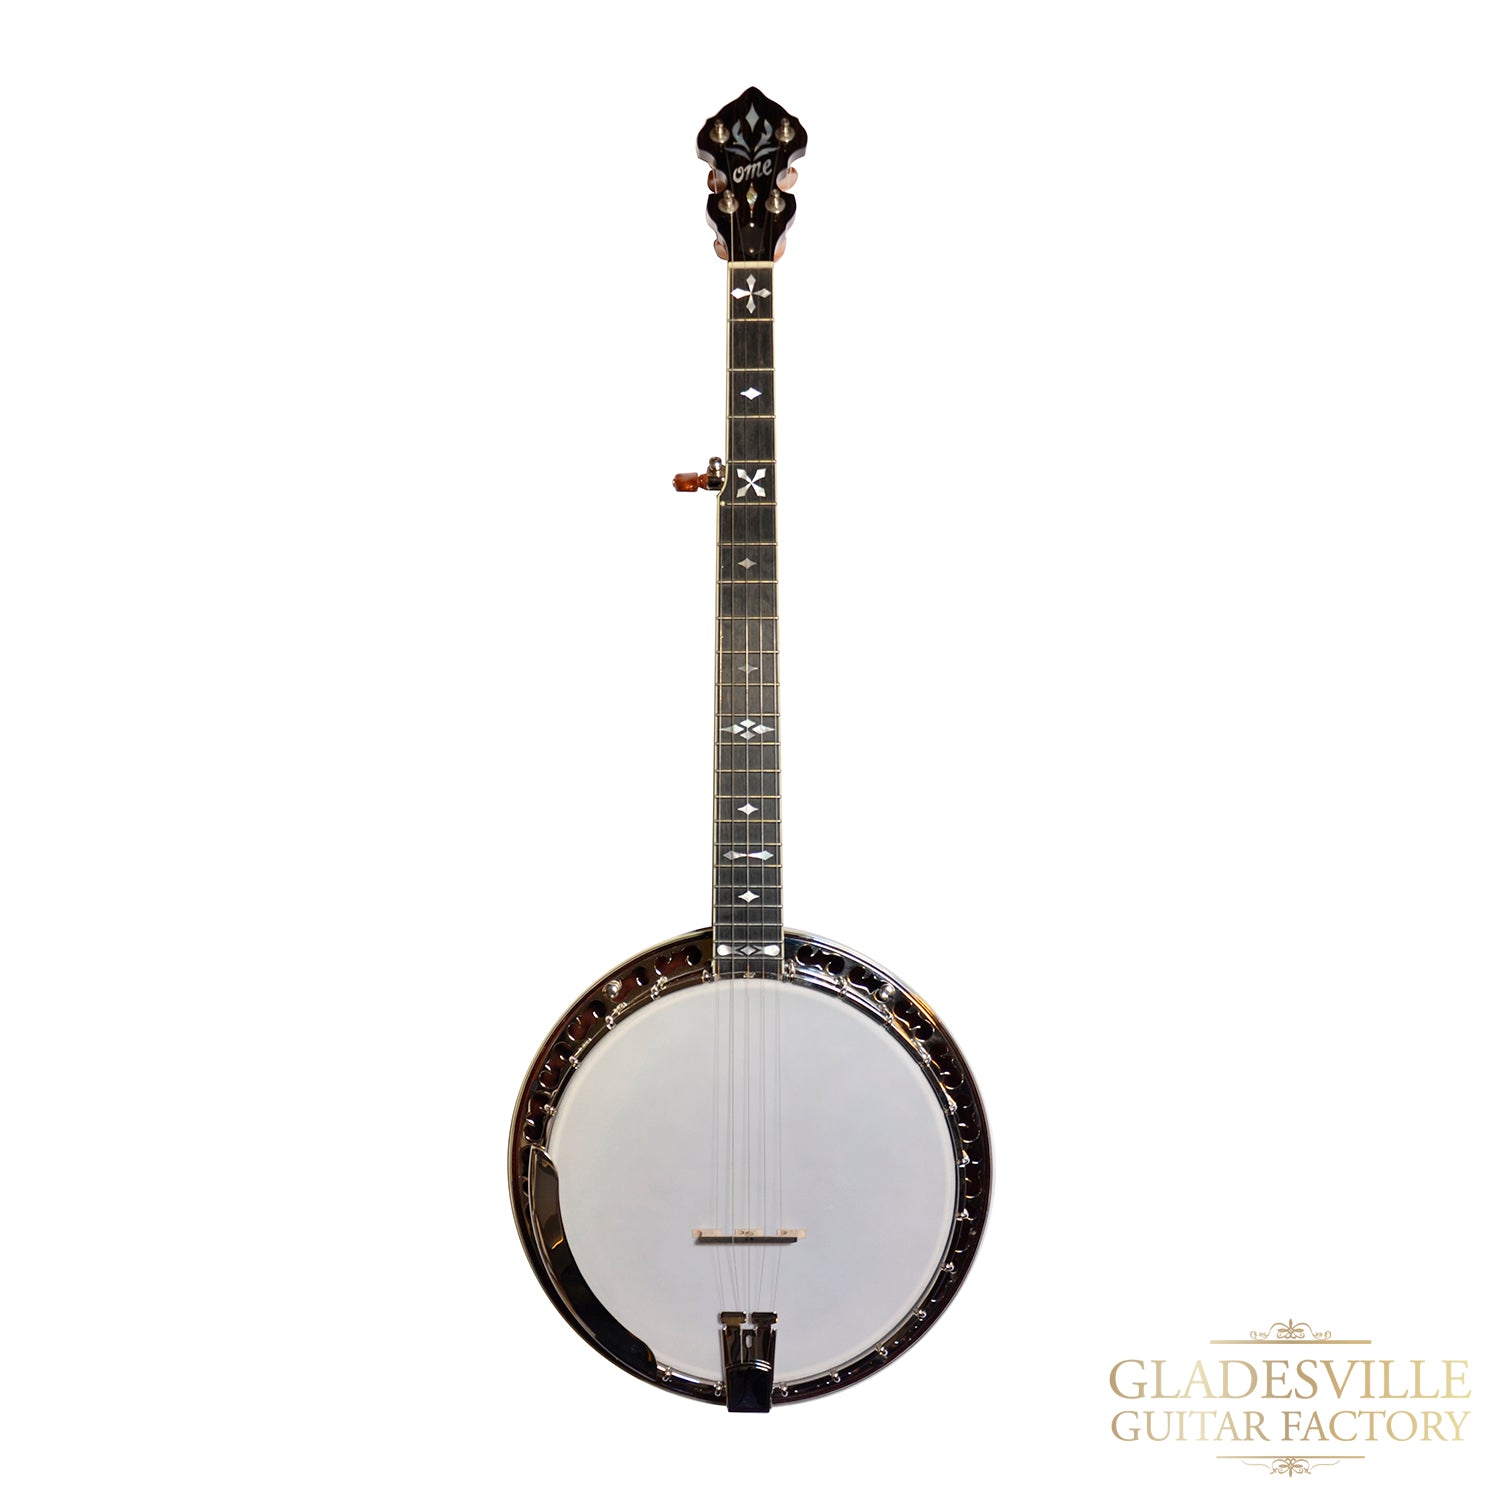 Ome 5-String Southern Cross Resonator Banjo S#6467